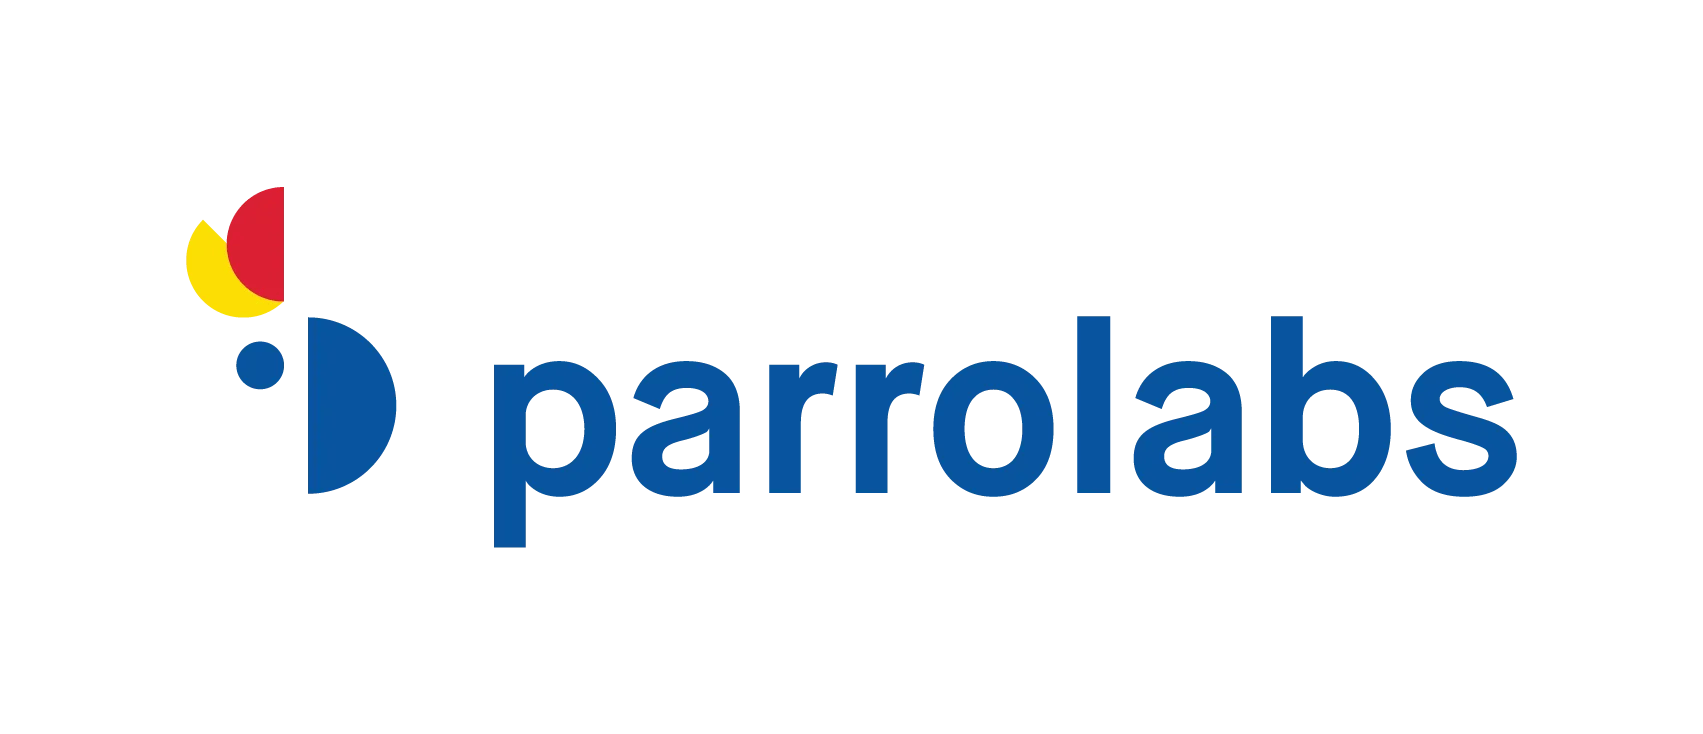 Parrolabs logotype